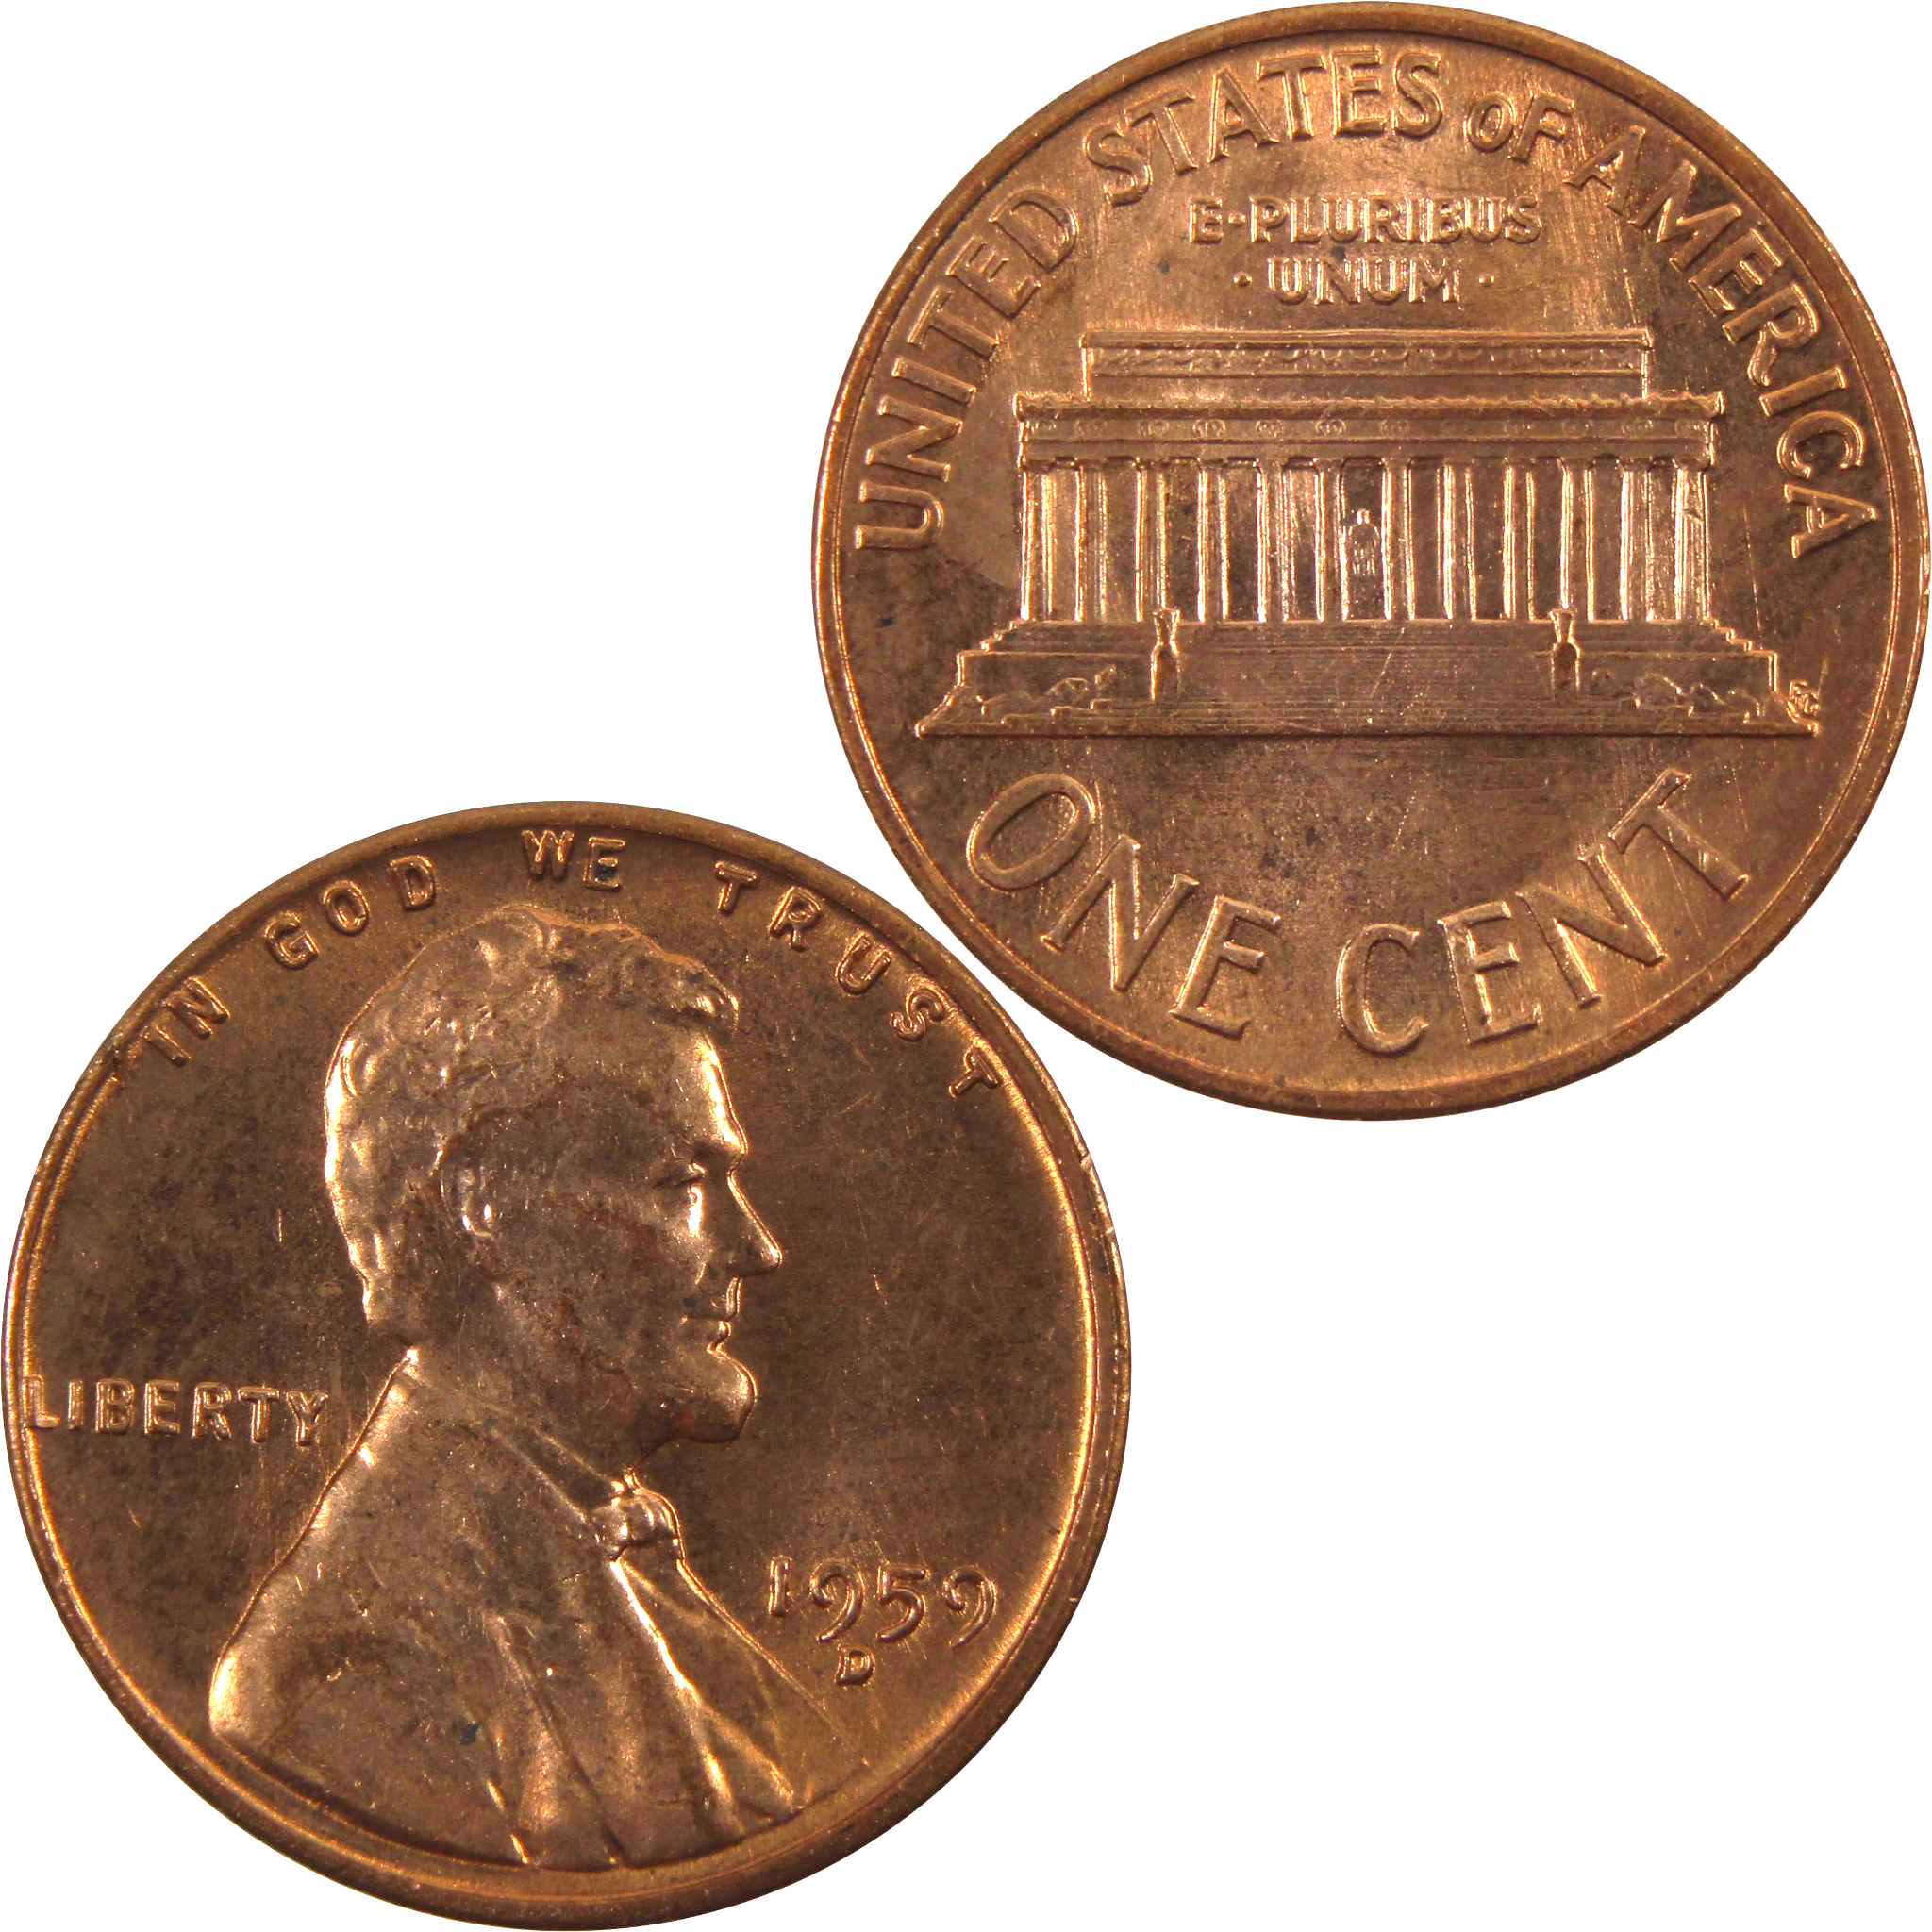 USA 1 Cent, 1959 Lincoln Memorial Cent Münzzeichen: D Denver